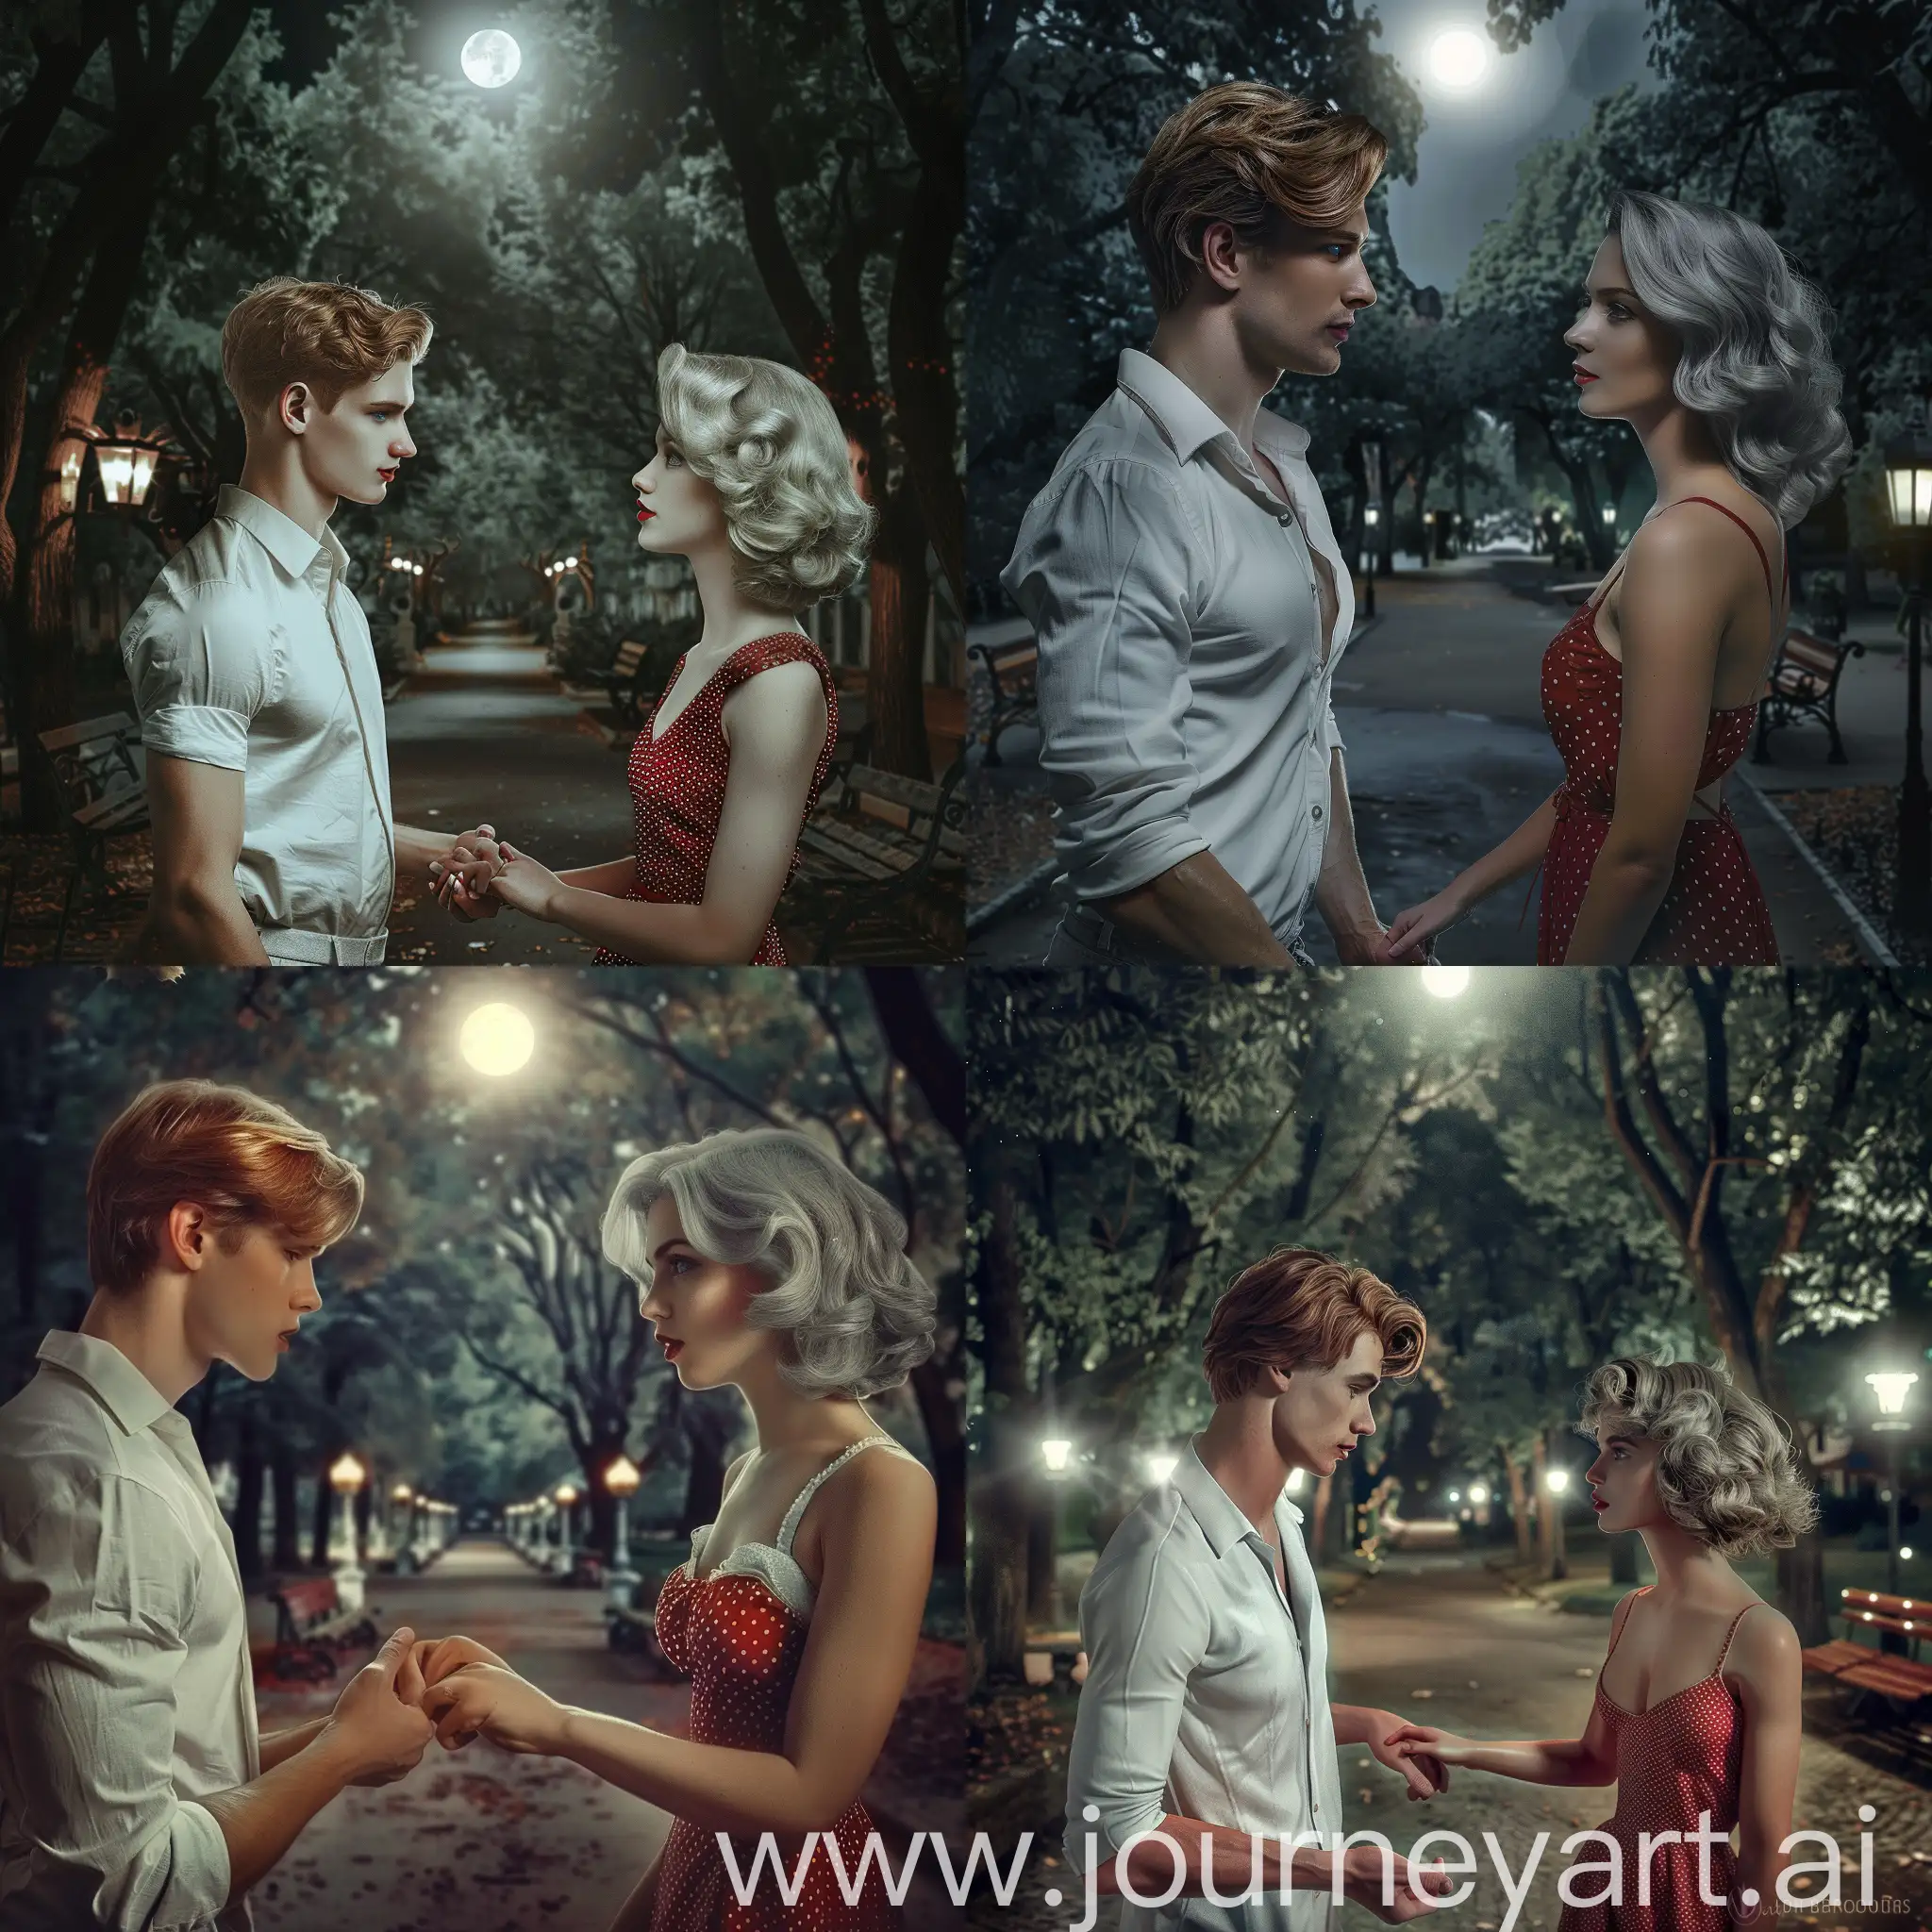 Romantic-Moonlit-Encounter-Loving-Couple-in-a-Nighttime-Park